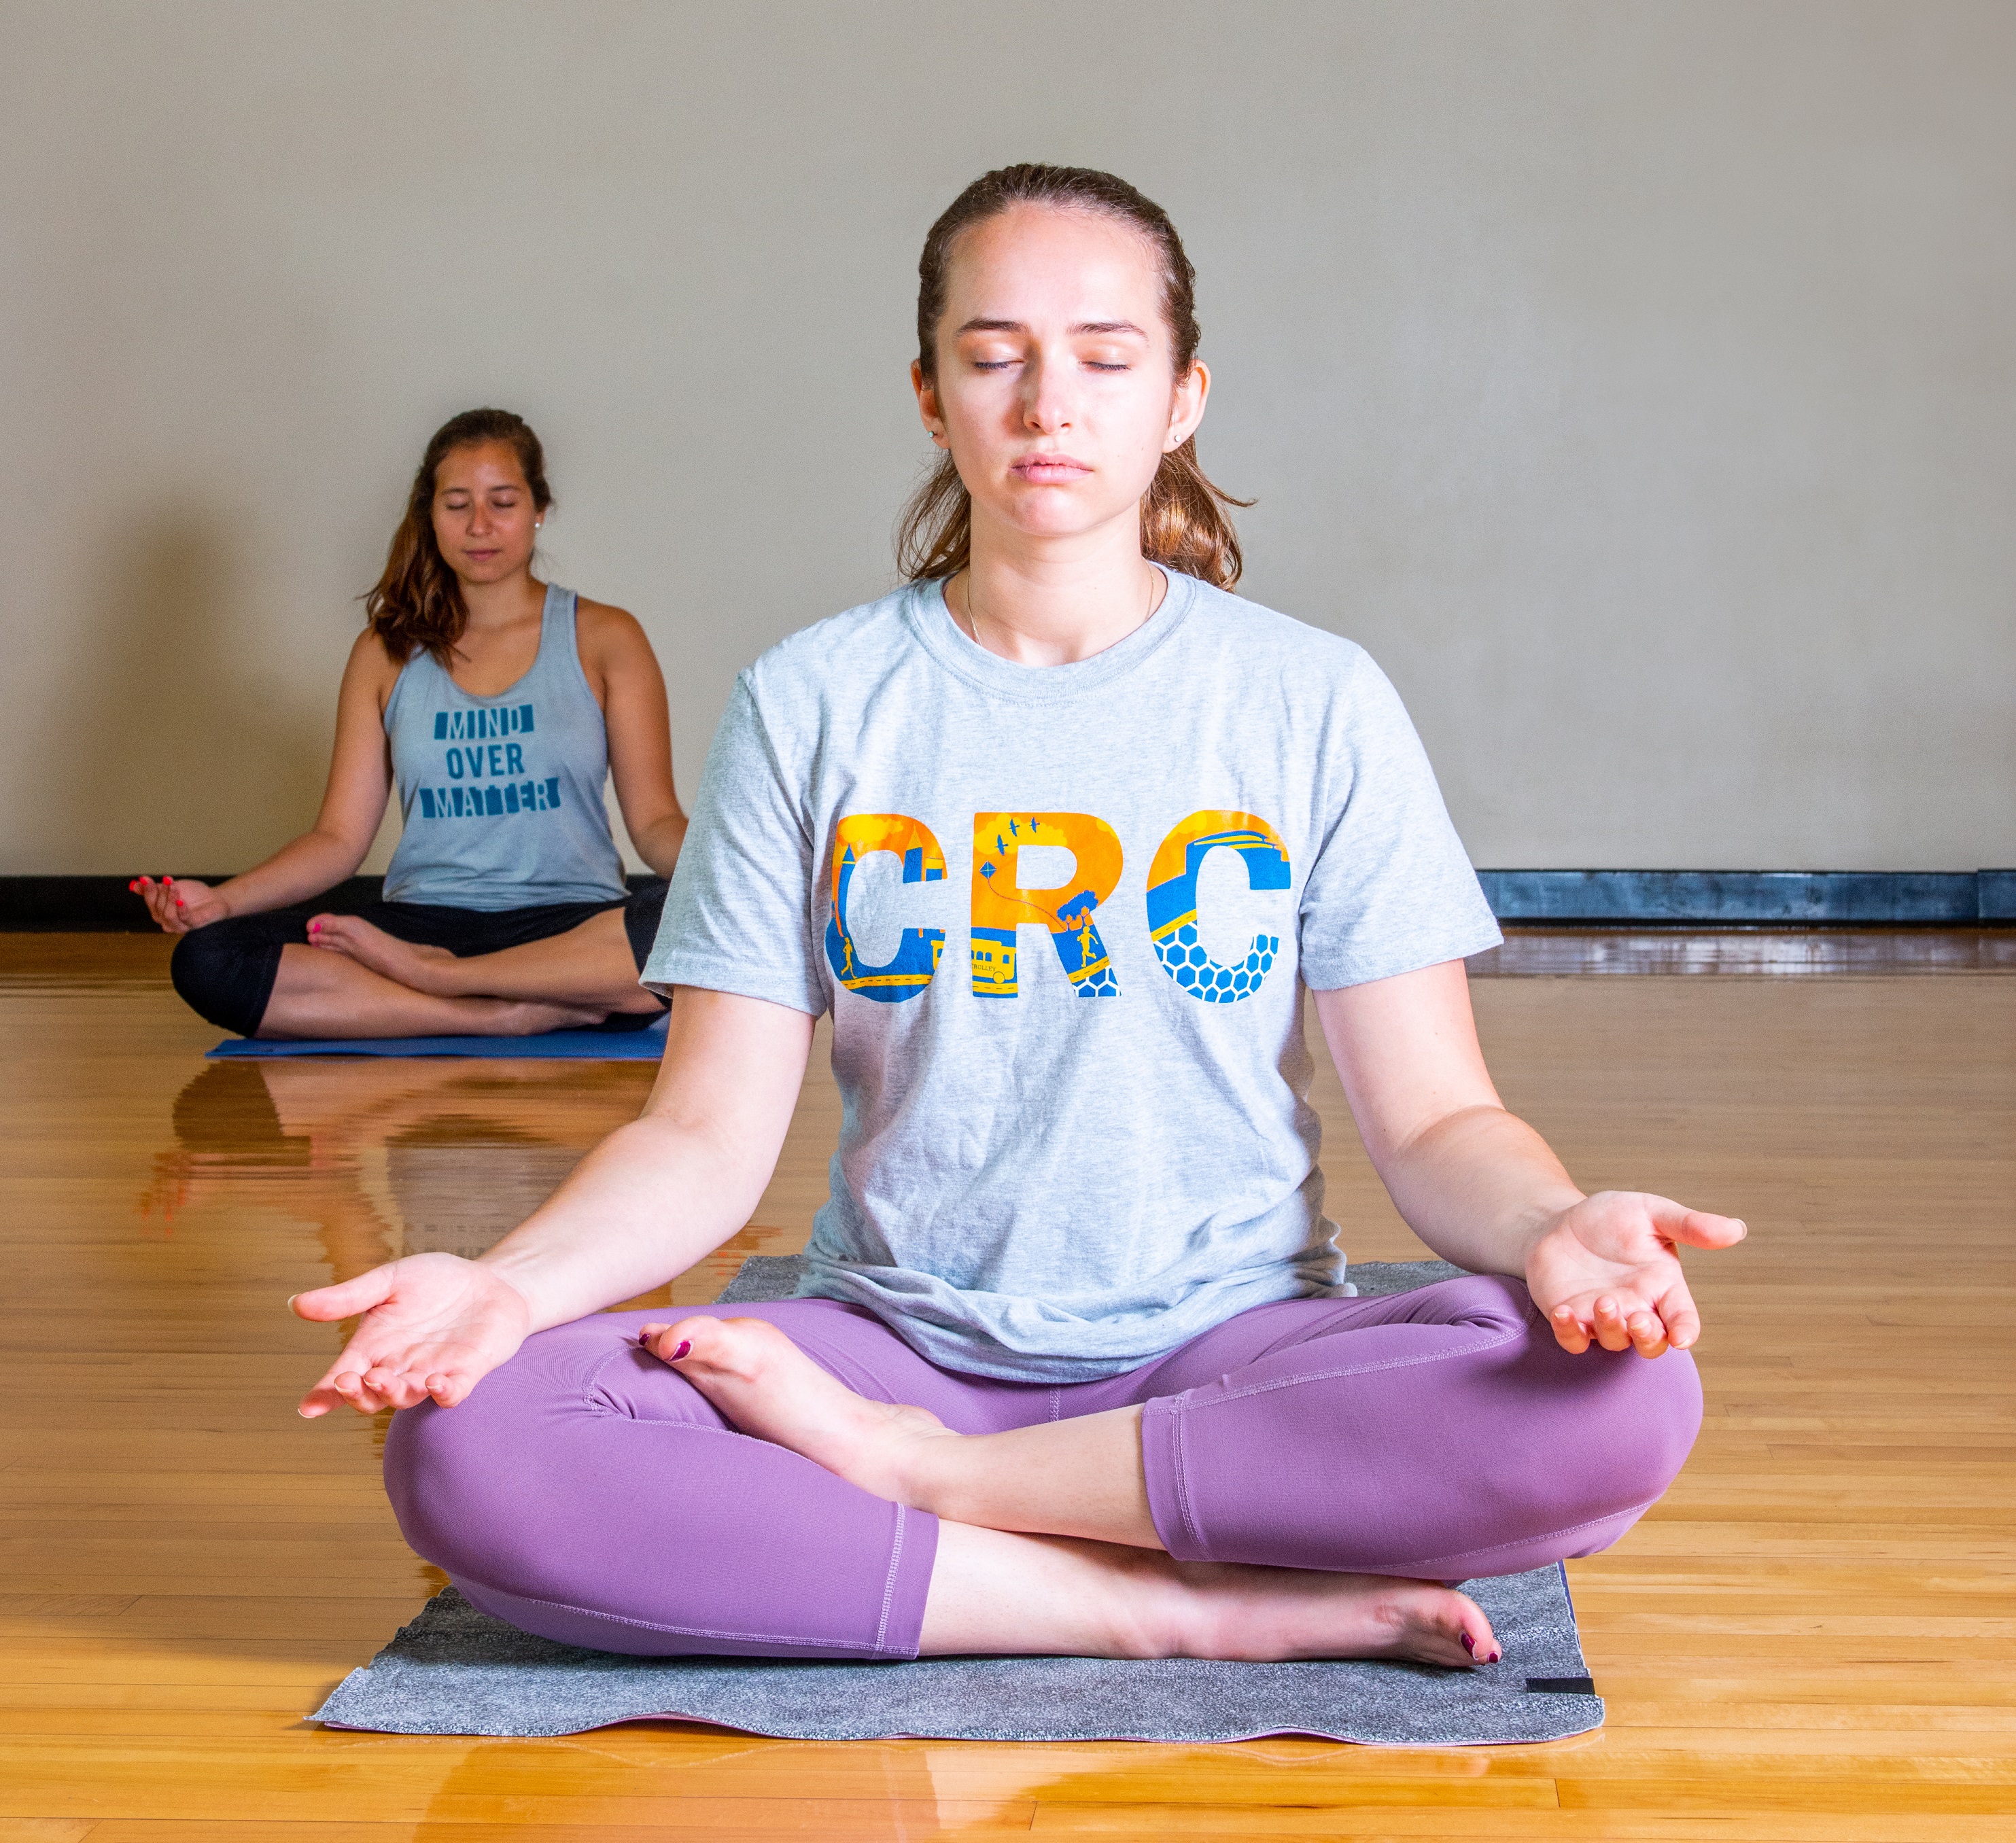 45-Minute Yoga Flow with Rachel Soon